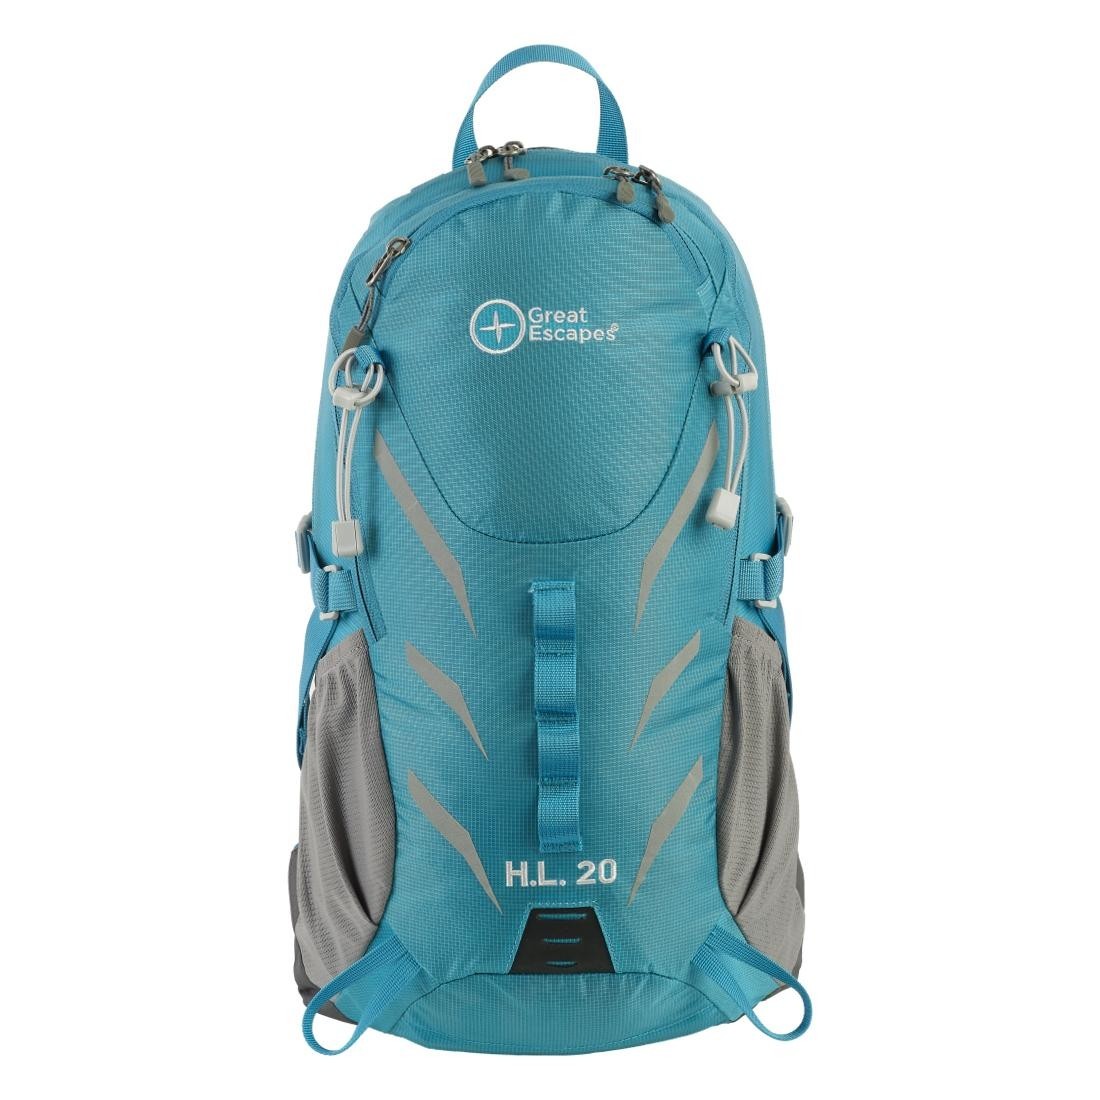 H.L. 20 - Trekking backpack 20 liters